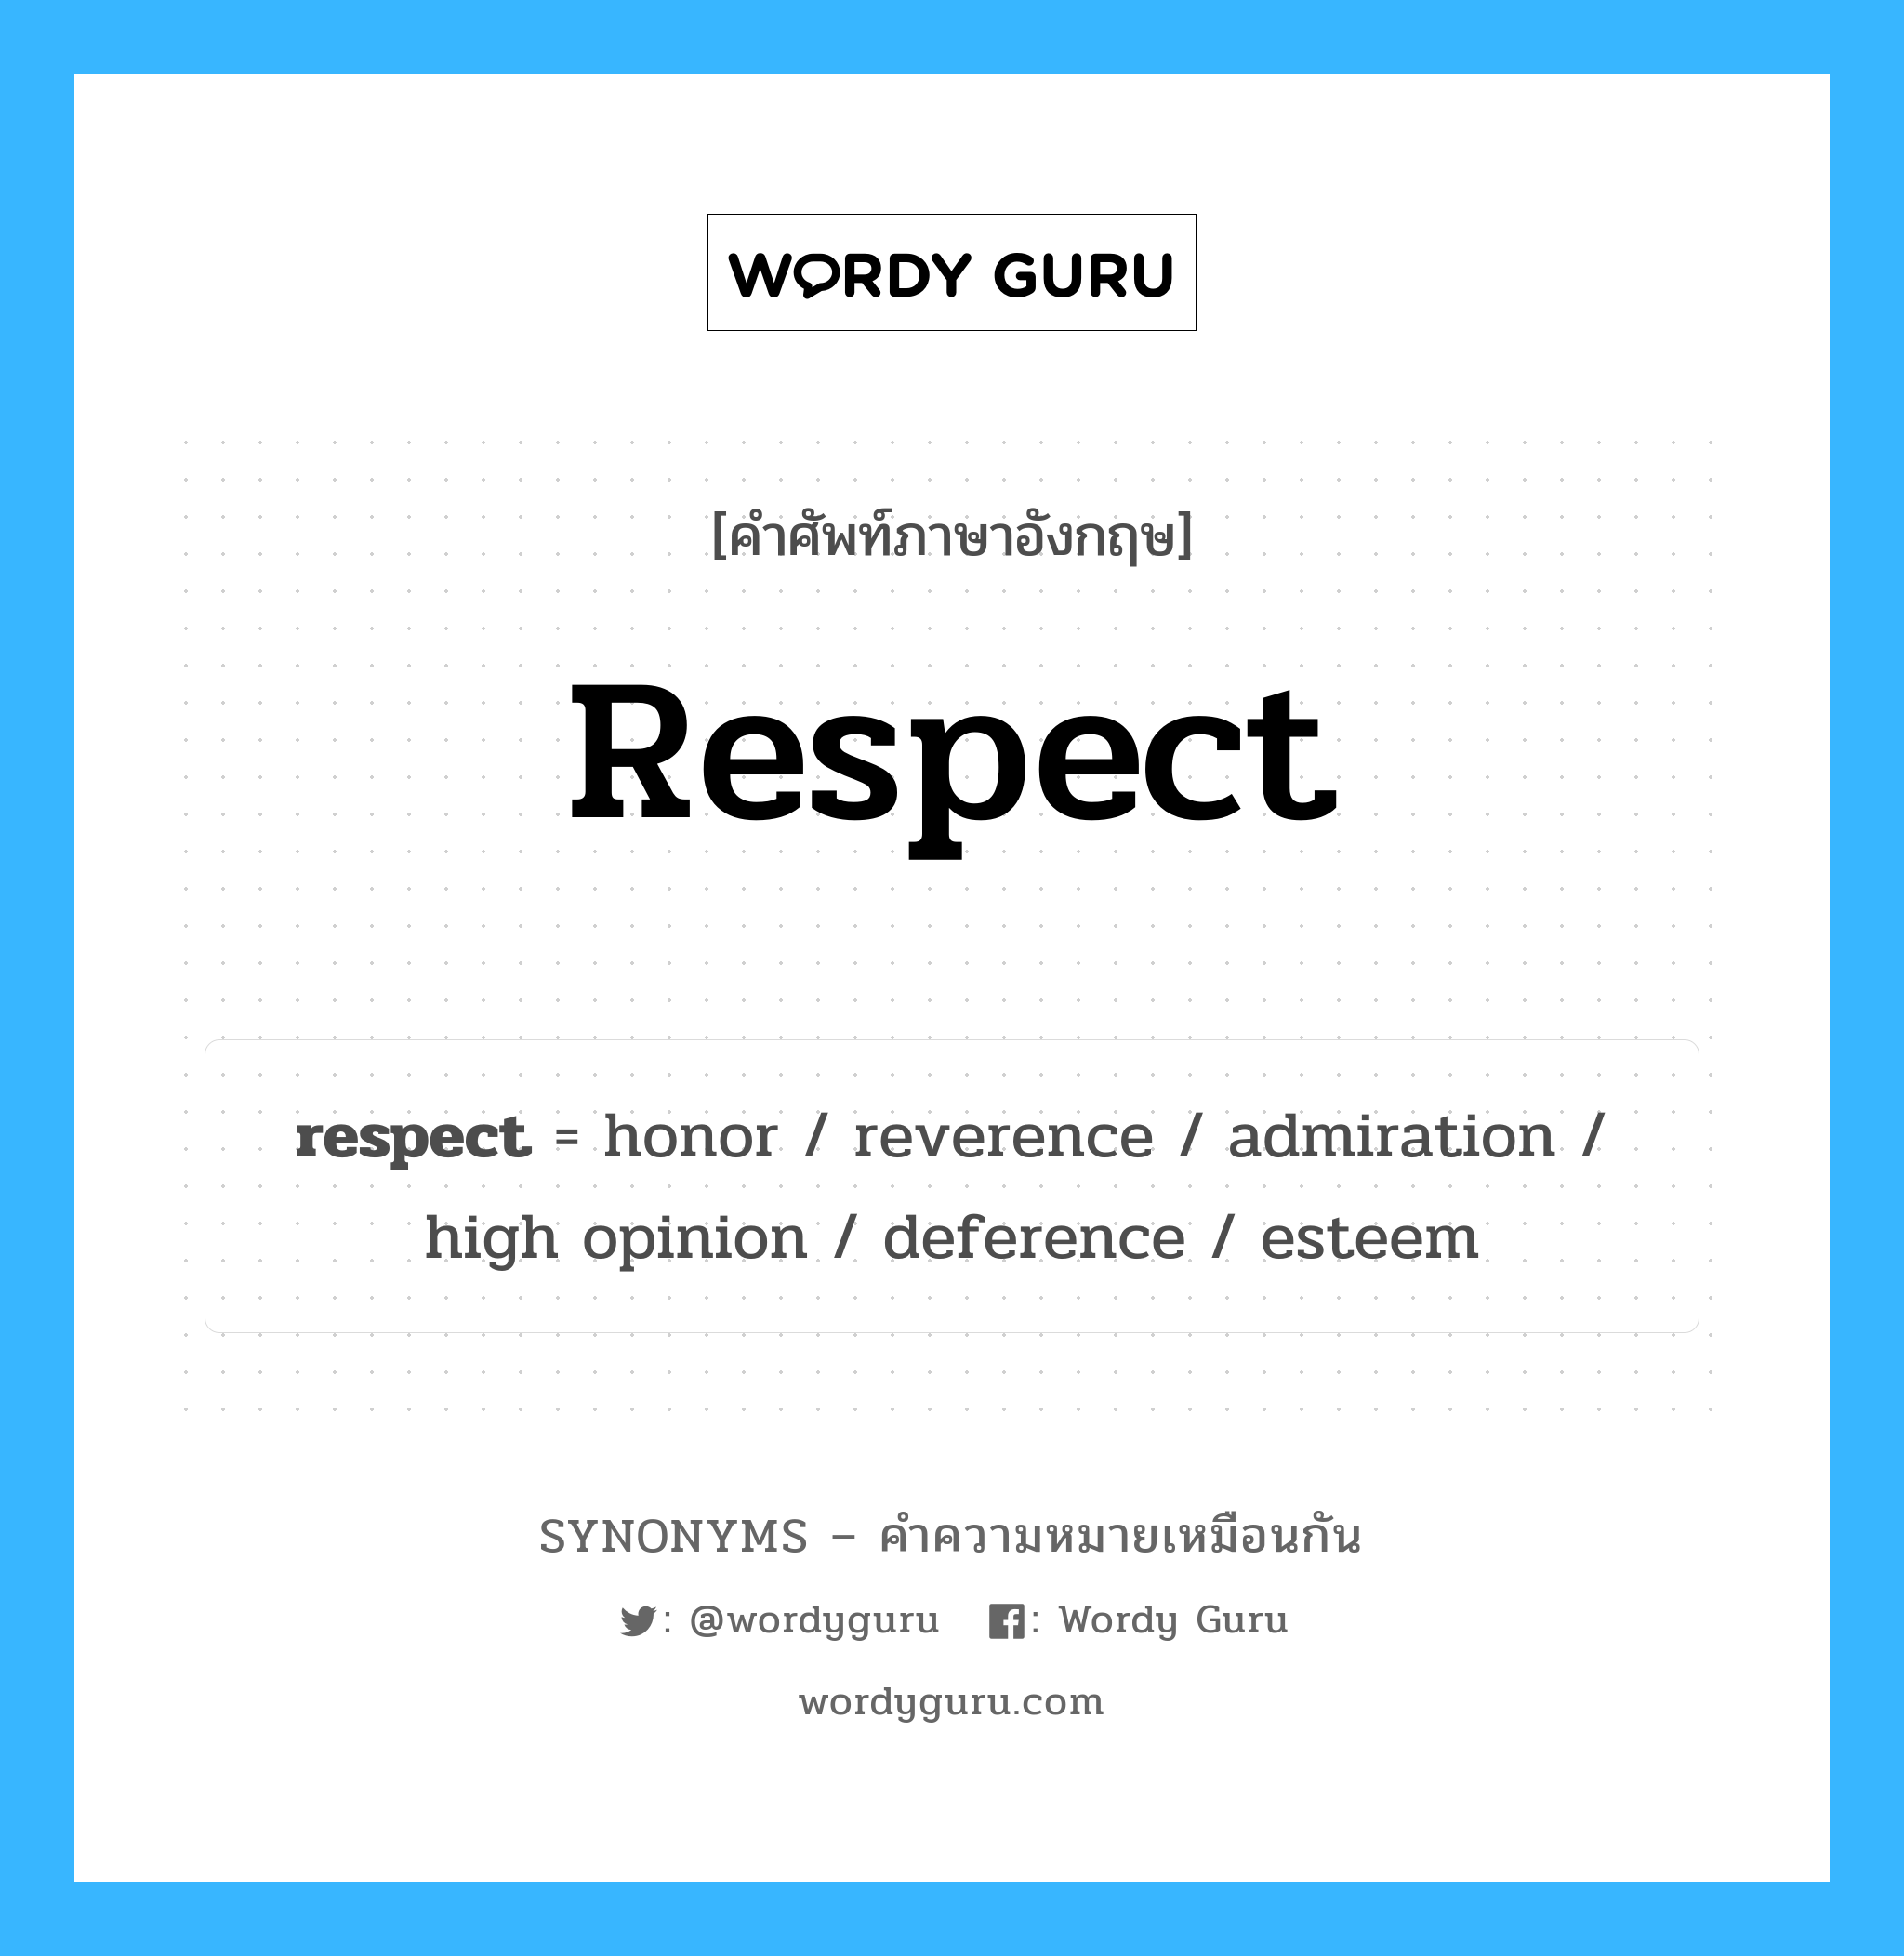 admiration เป็นหนึ่งใน respect และมีคำอื่น ๆ อีกดังนี้, คำศัพท์ภาษาอังกฤษ admiration ความหมายคล้ายกันกับ respect แปลว่า ชื่นชม หมวด respect